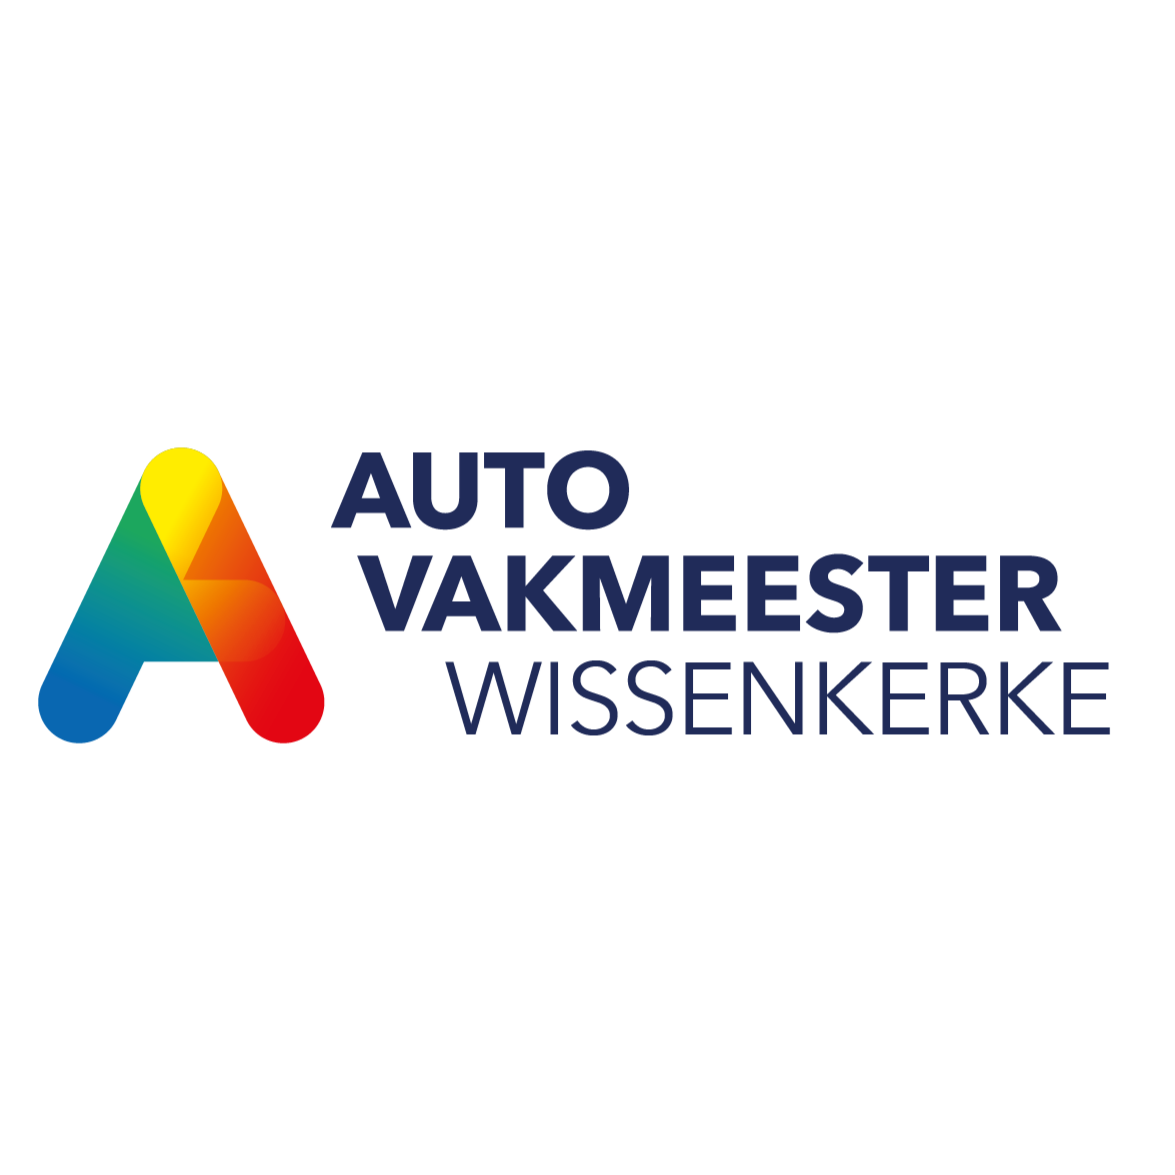 Autovakmeester Wissenkerke Logo